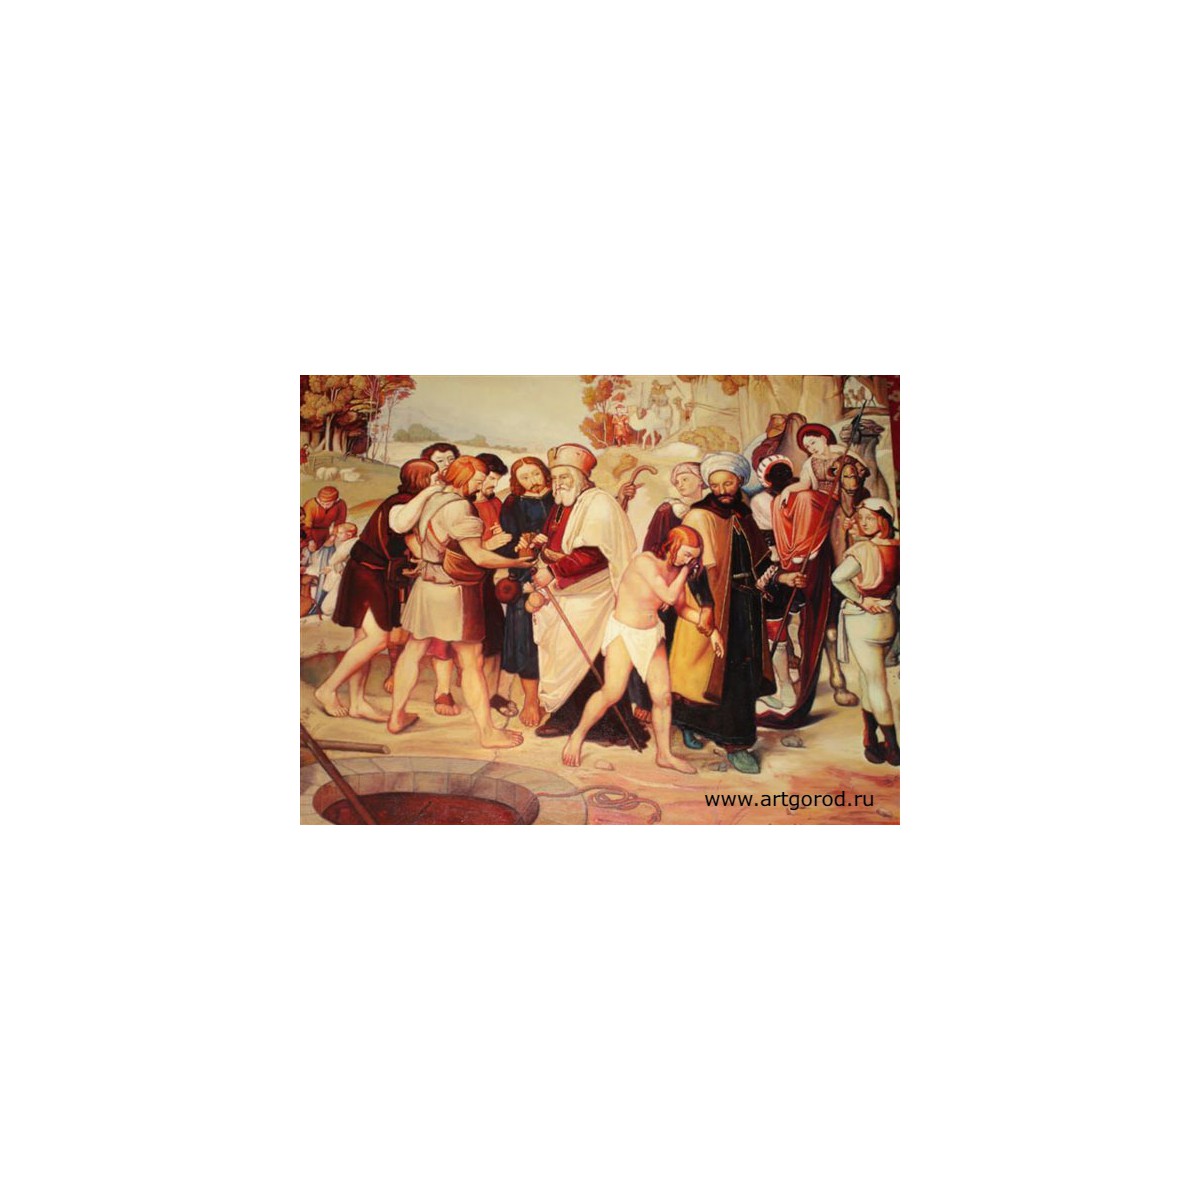 картина с фрески Овербека "Продажа Иосифа братьями"